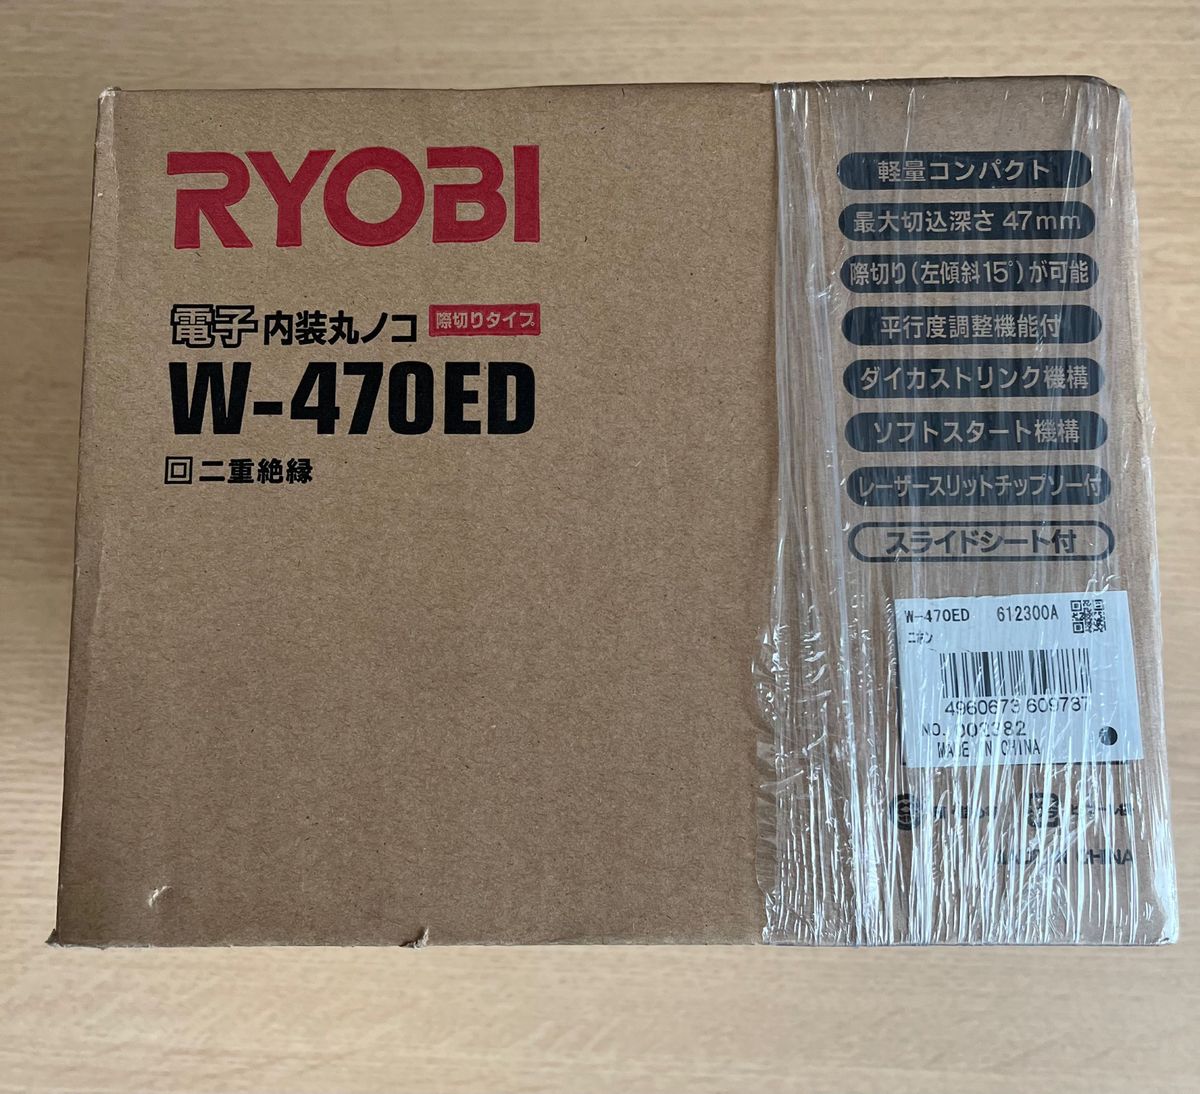 ★RYOBI W-470ED リョービマルノコ★